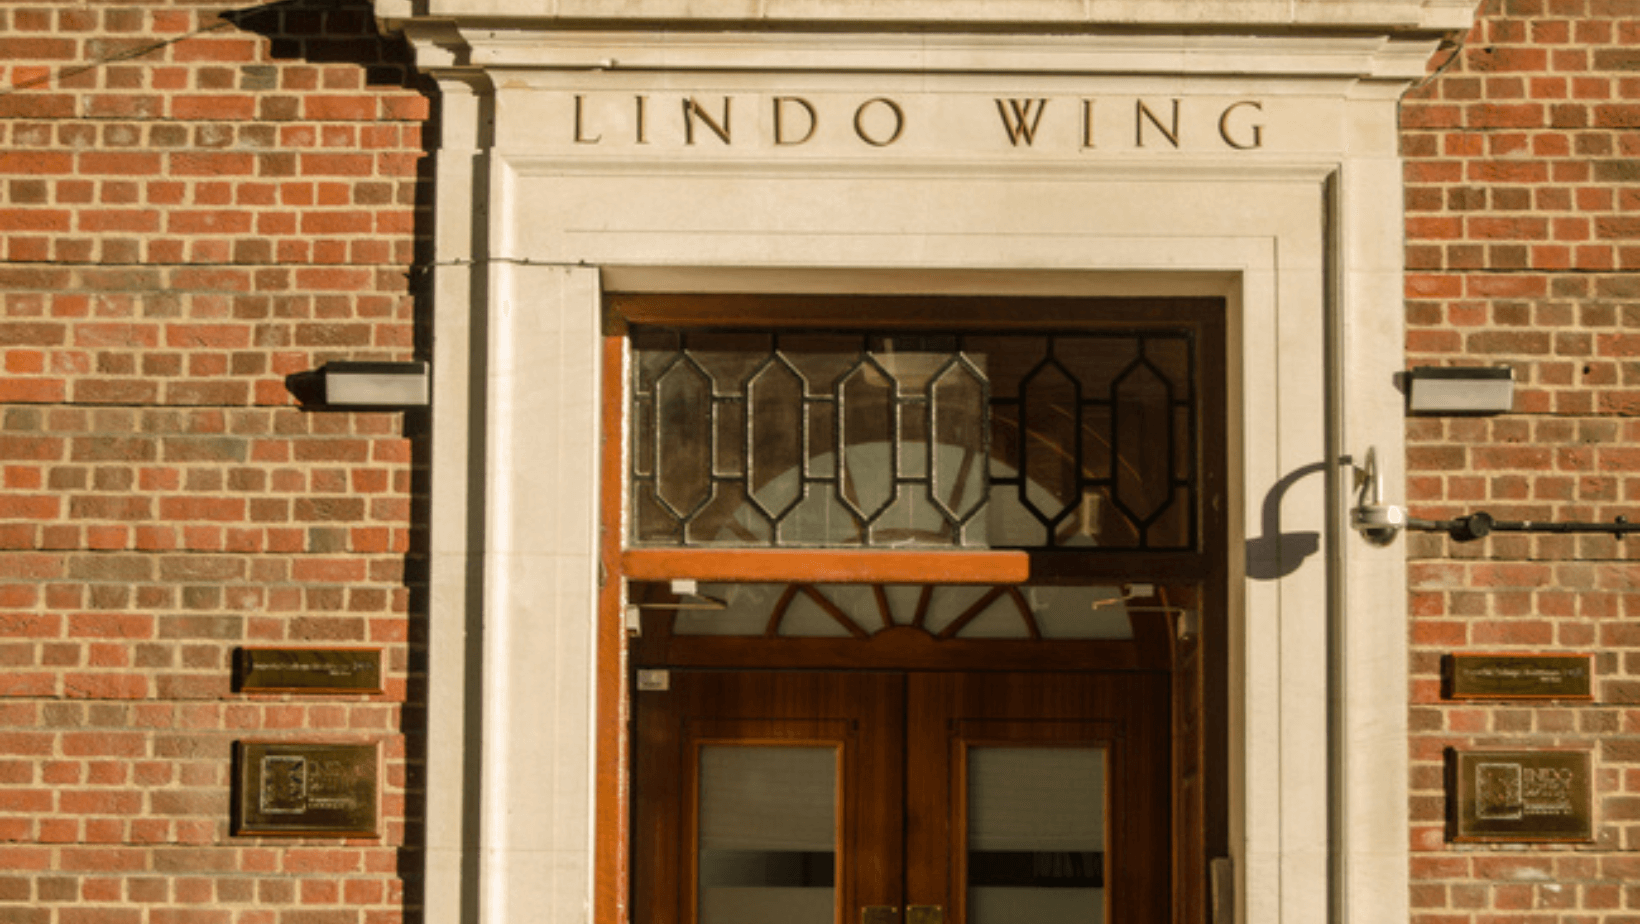 The Lindo Wing Hospital Signage